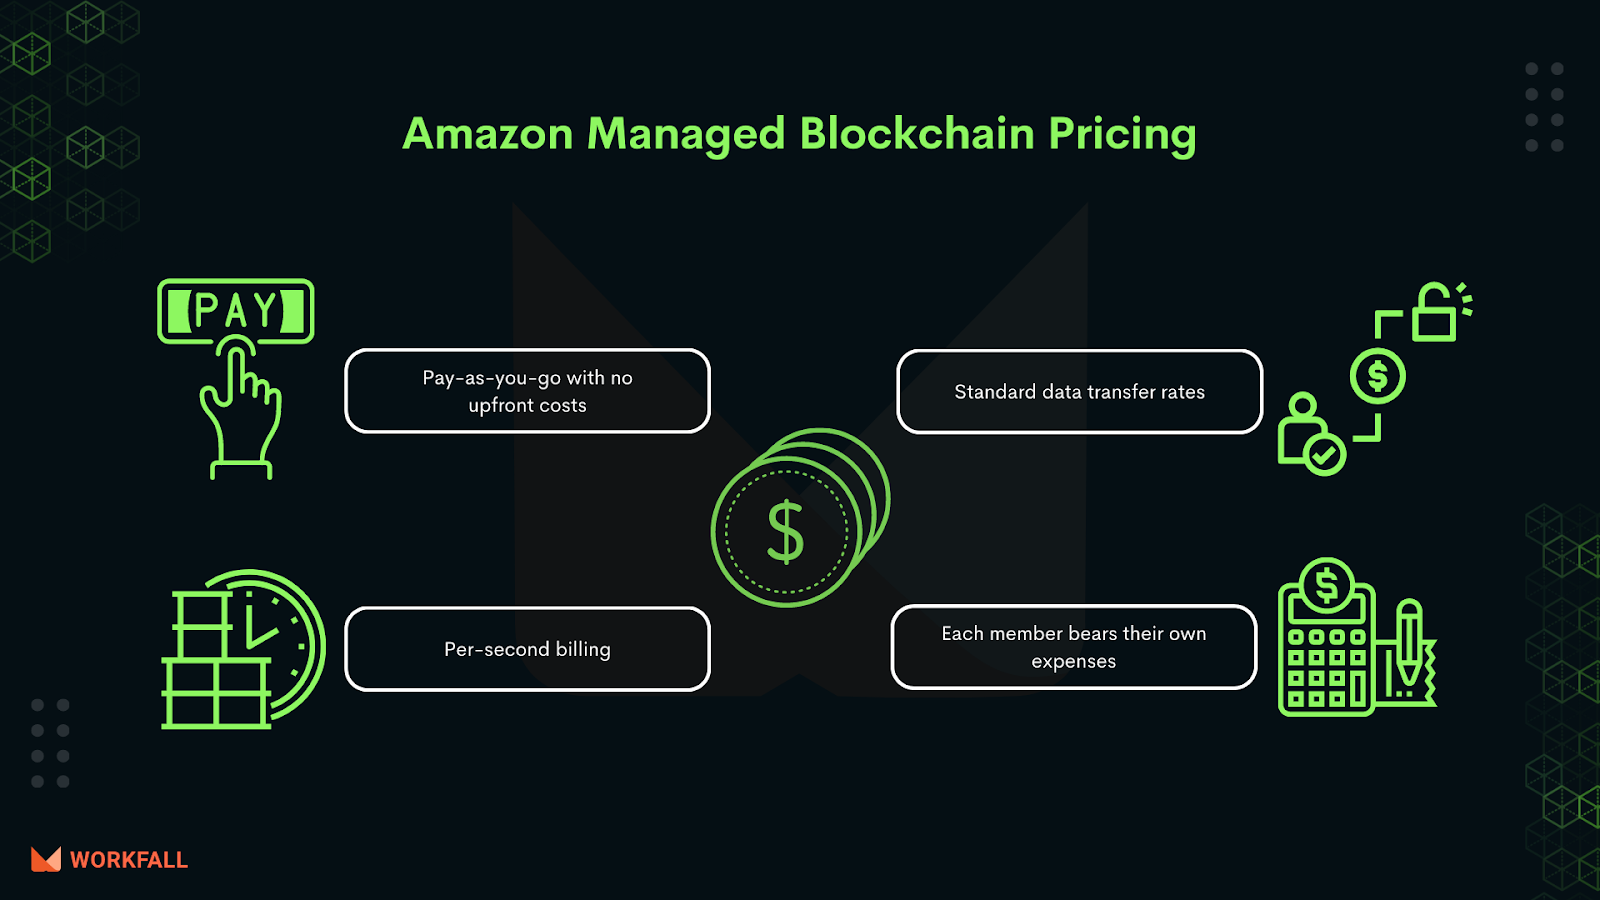 Pricing of Amazon Managed Blockchain